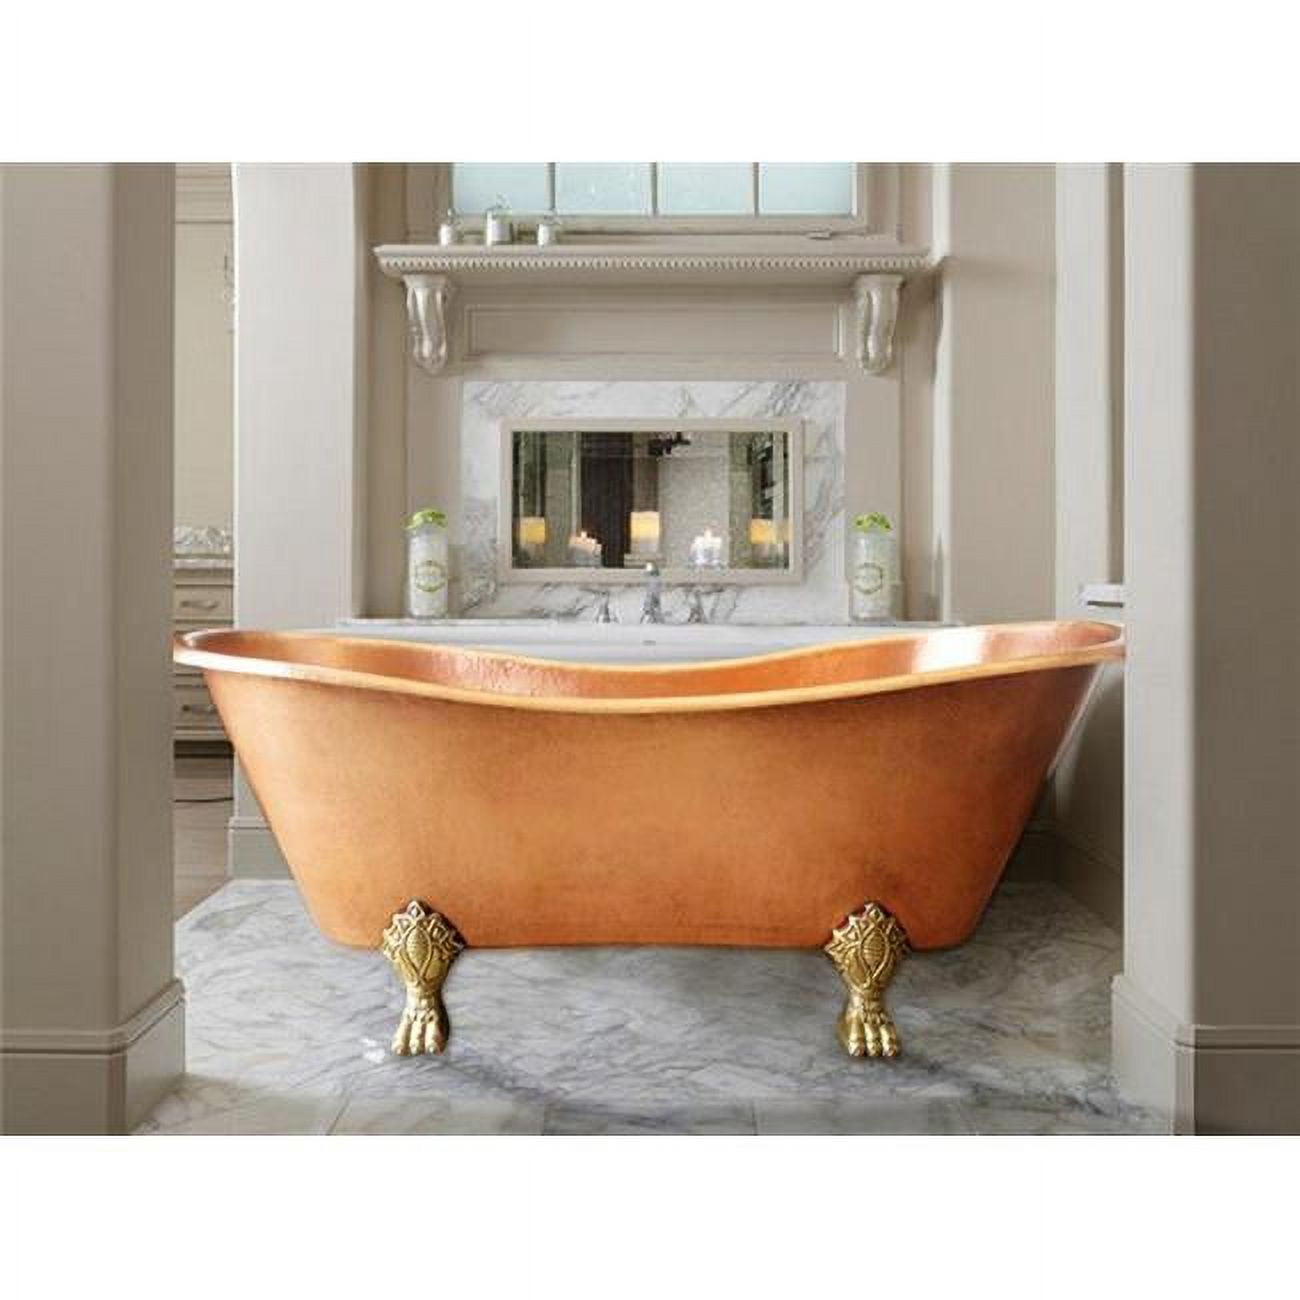 Cbt-at-58-dl Copper Bath Tub Antique Design, Dark Light - Small - 28 X 28 X 58 In.